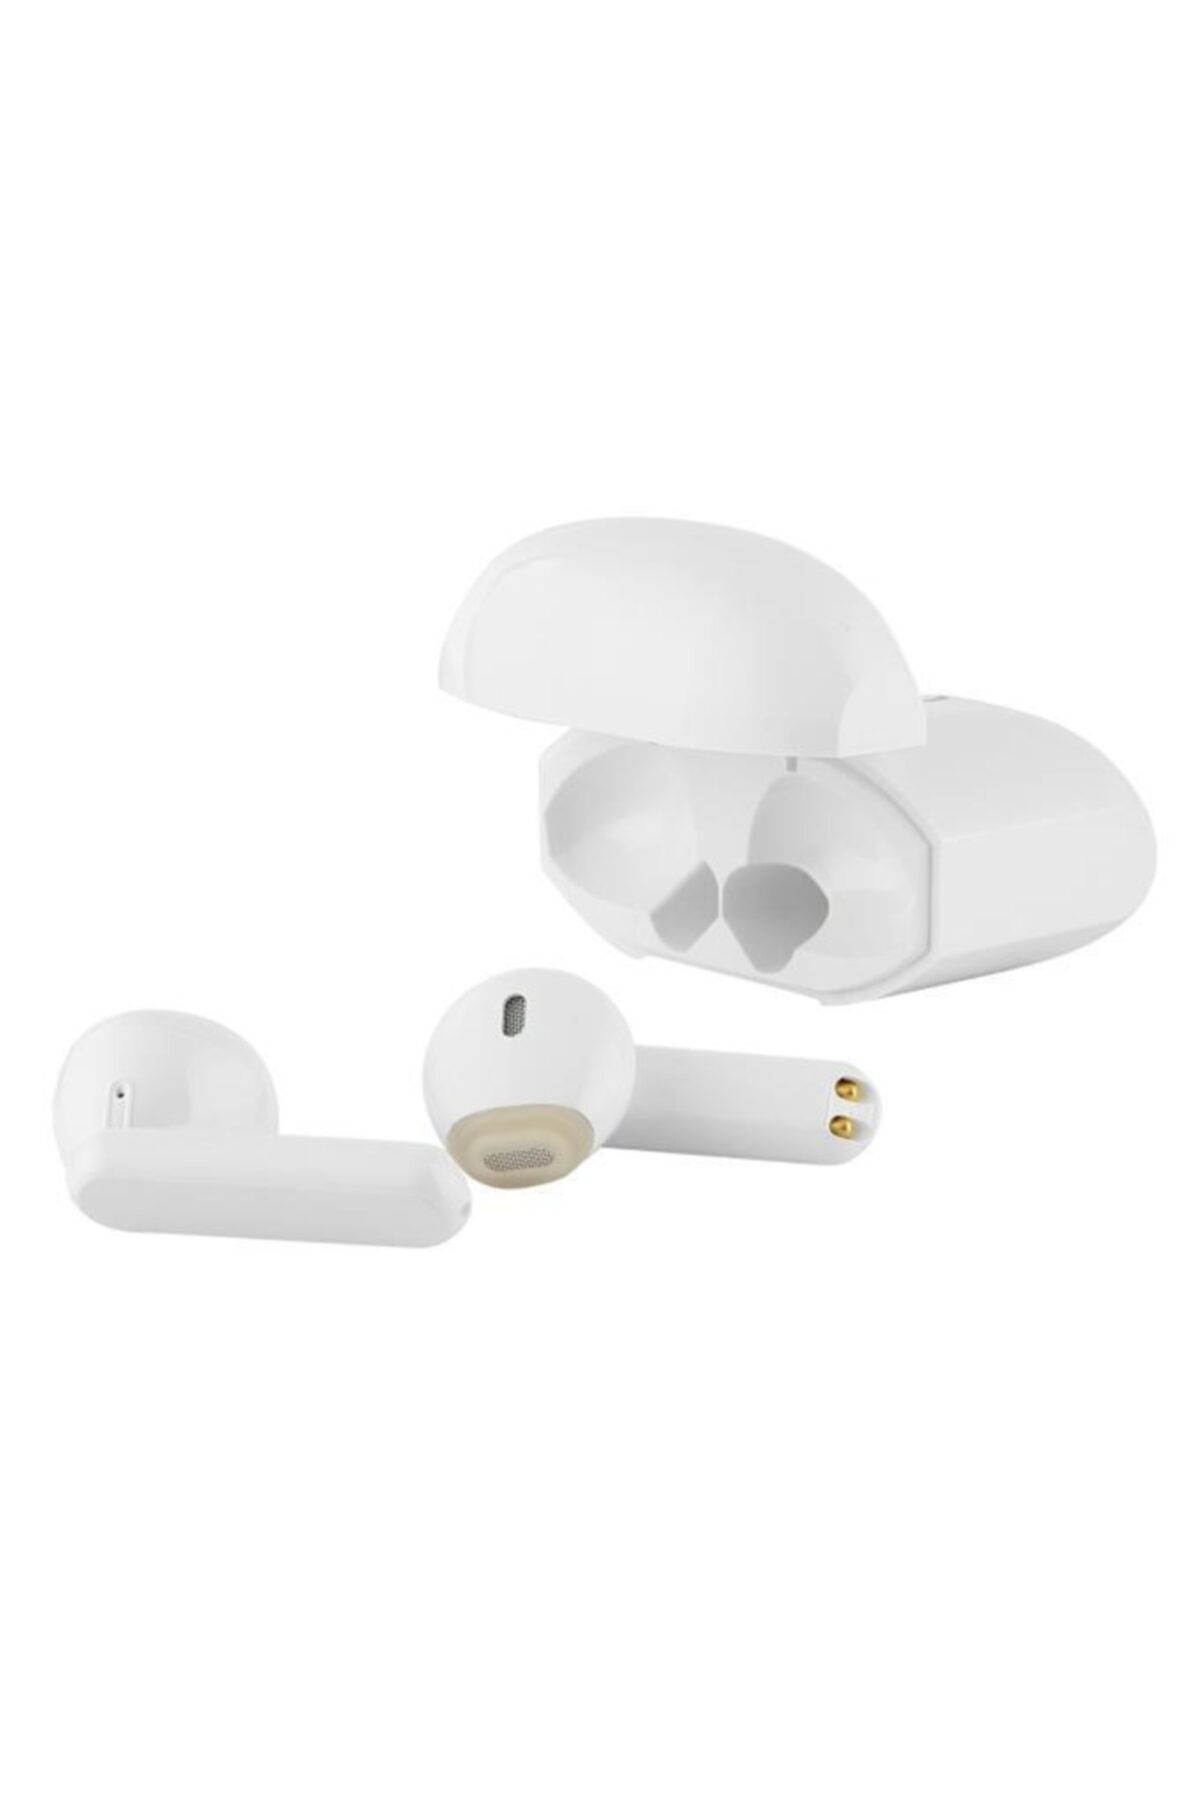 Preo My Sound Ms36 Dokunmatik Kontrol Led Güç Göstergeli Bluetooth 5.1 Tws Gerçek Kablosuz Kulaklık